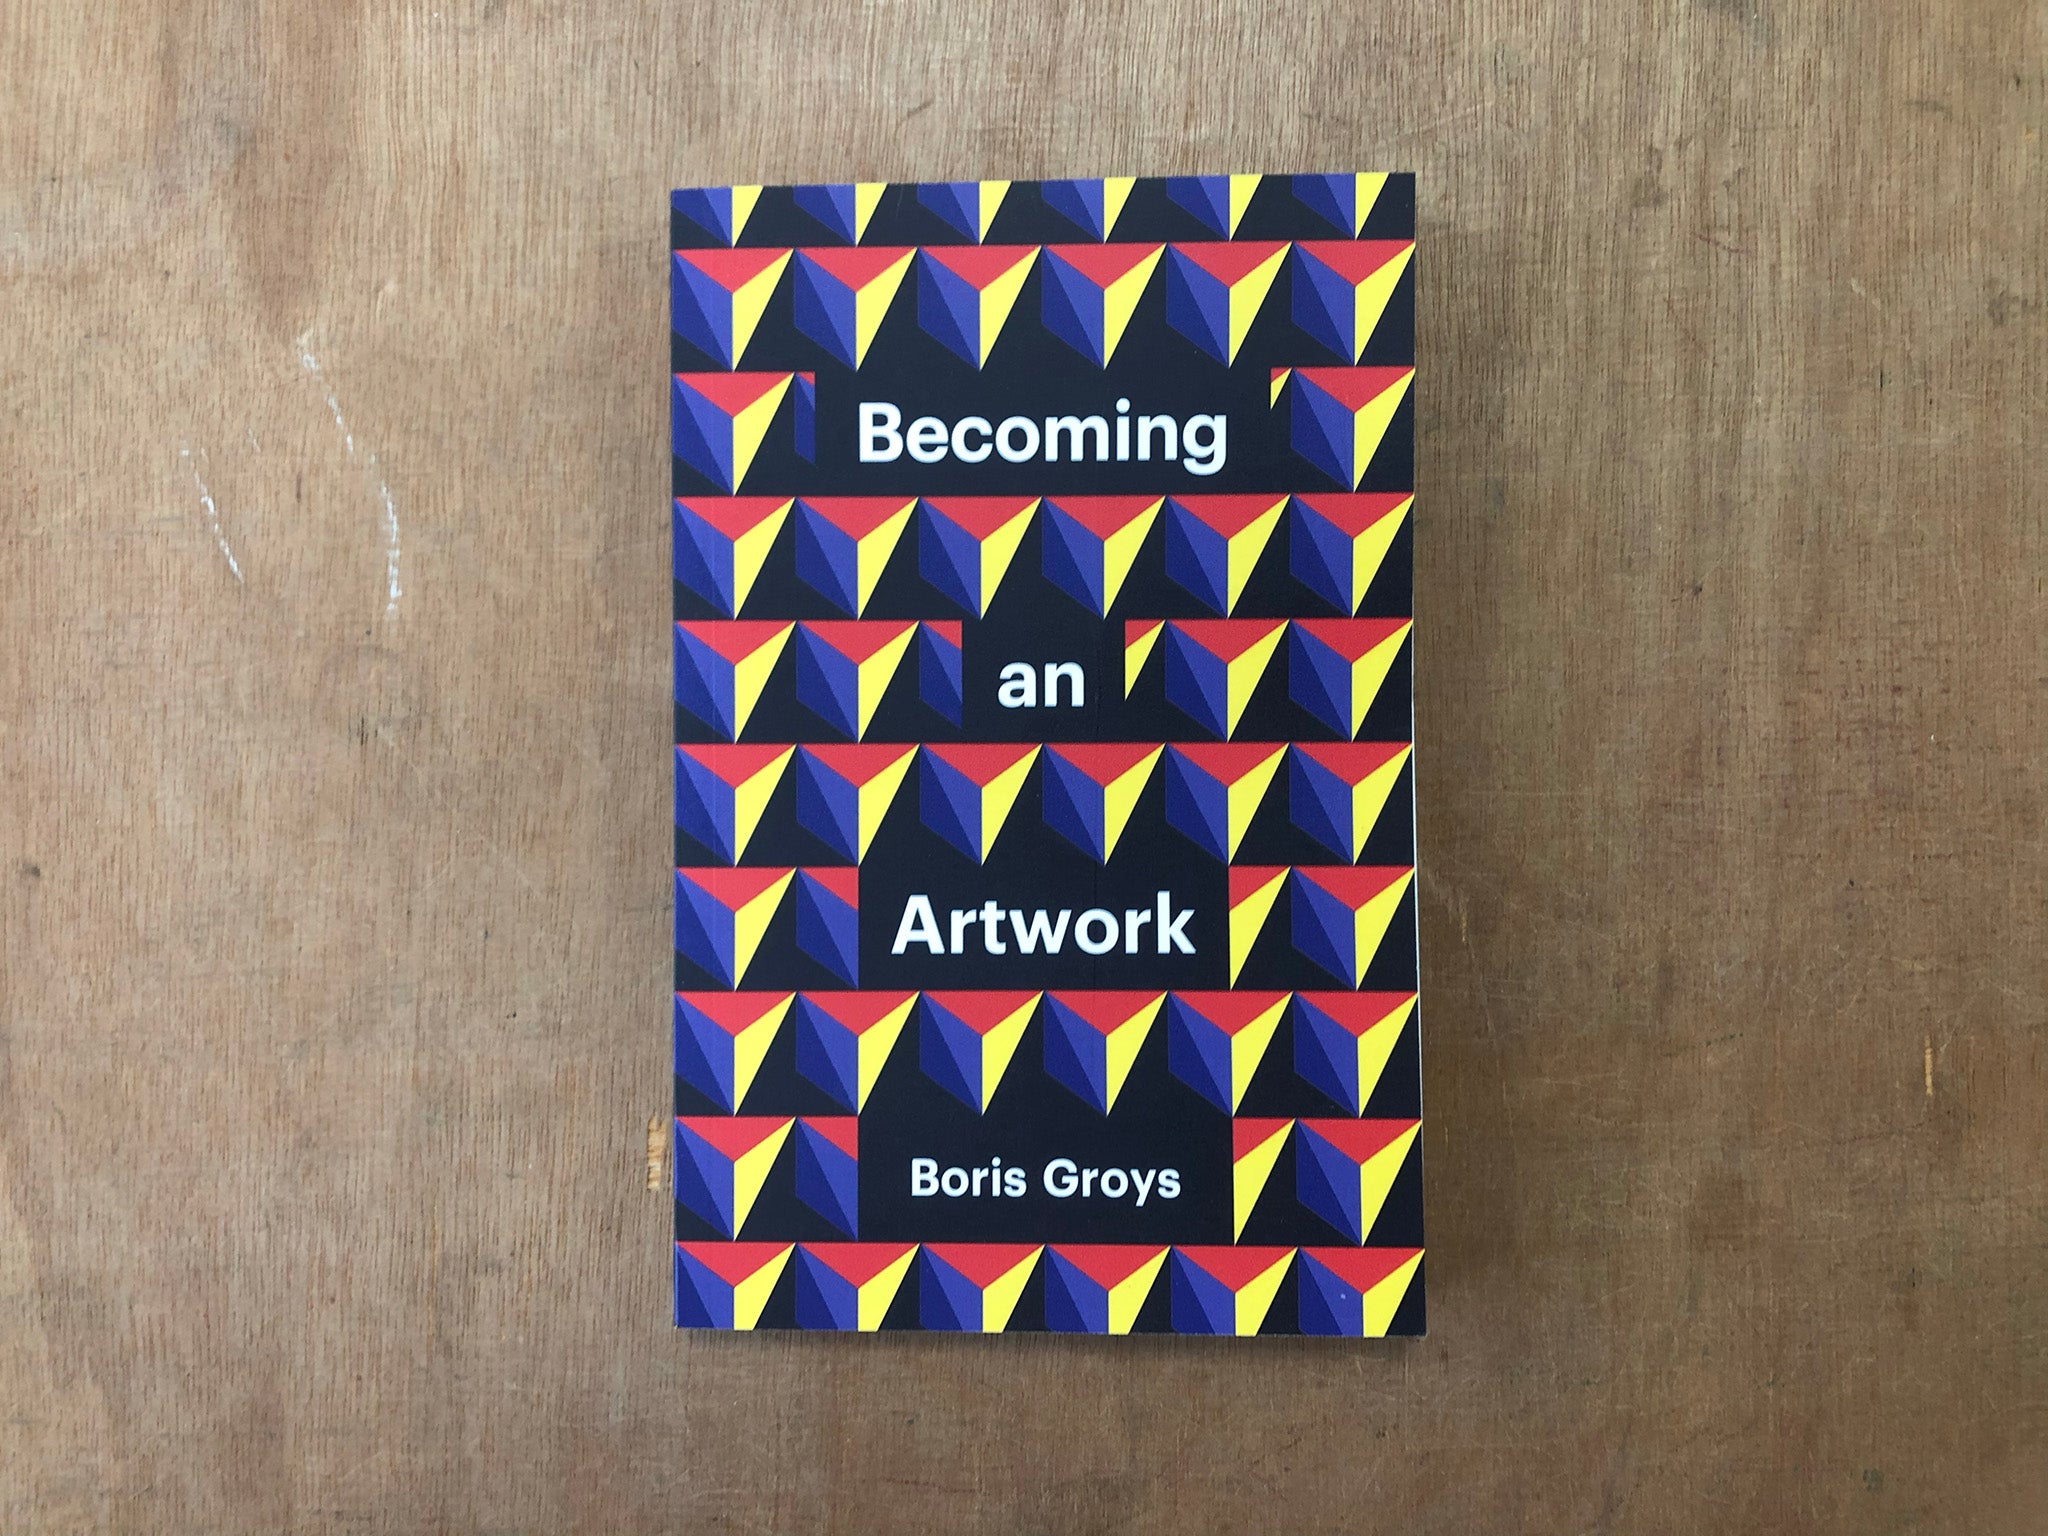 BECOMING AN ARTWORK by Boris Groys